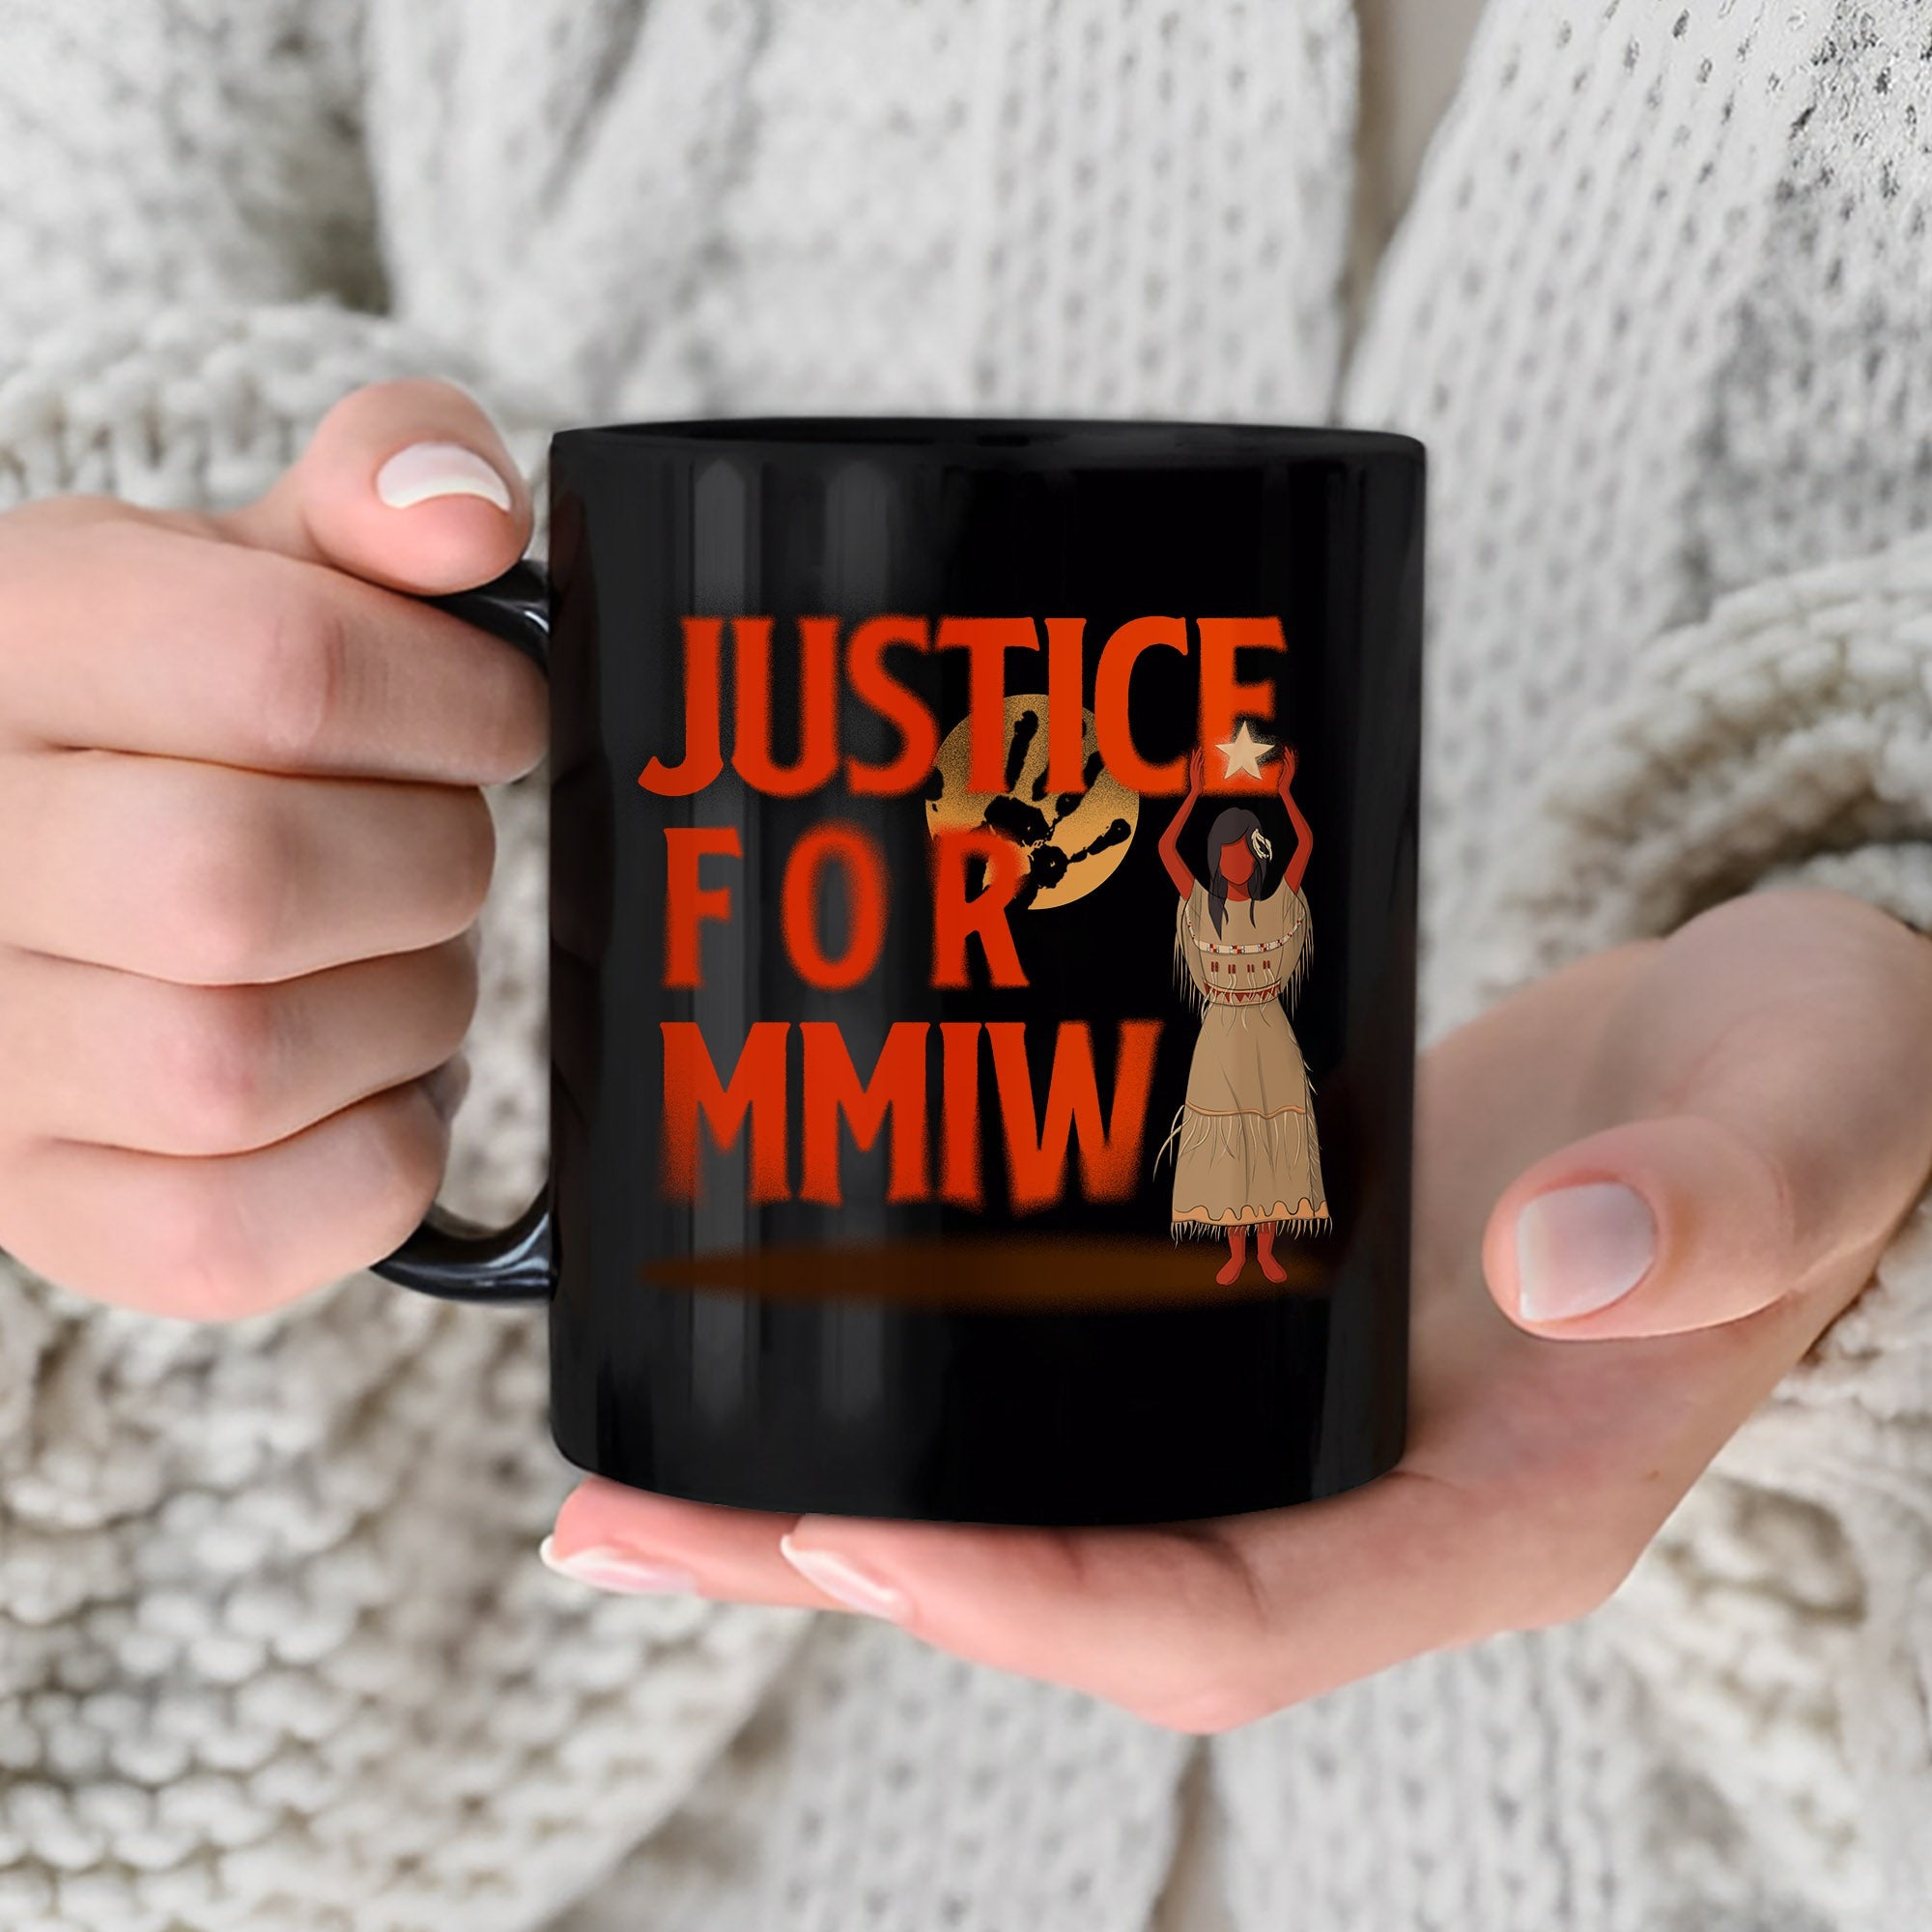 Justice For MMIW Ceramic Coffee Mug 007